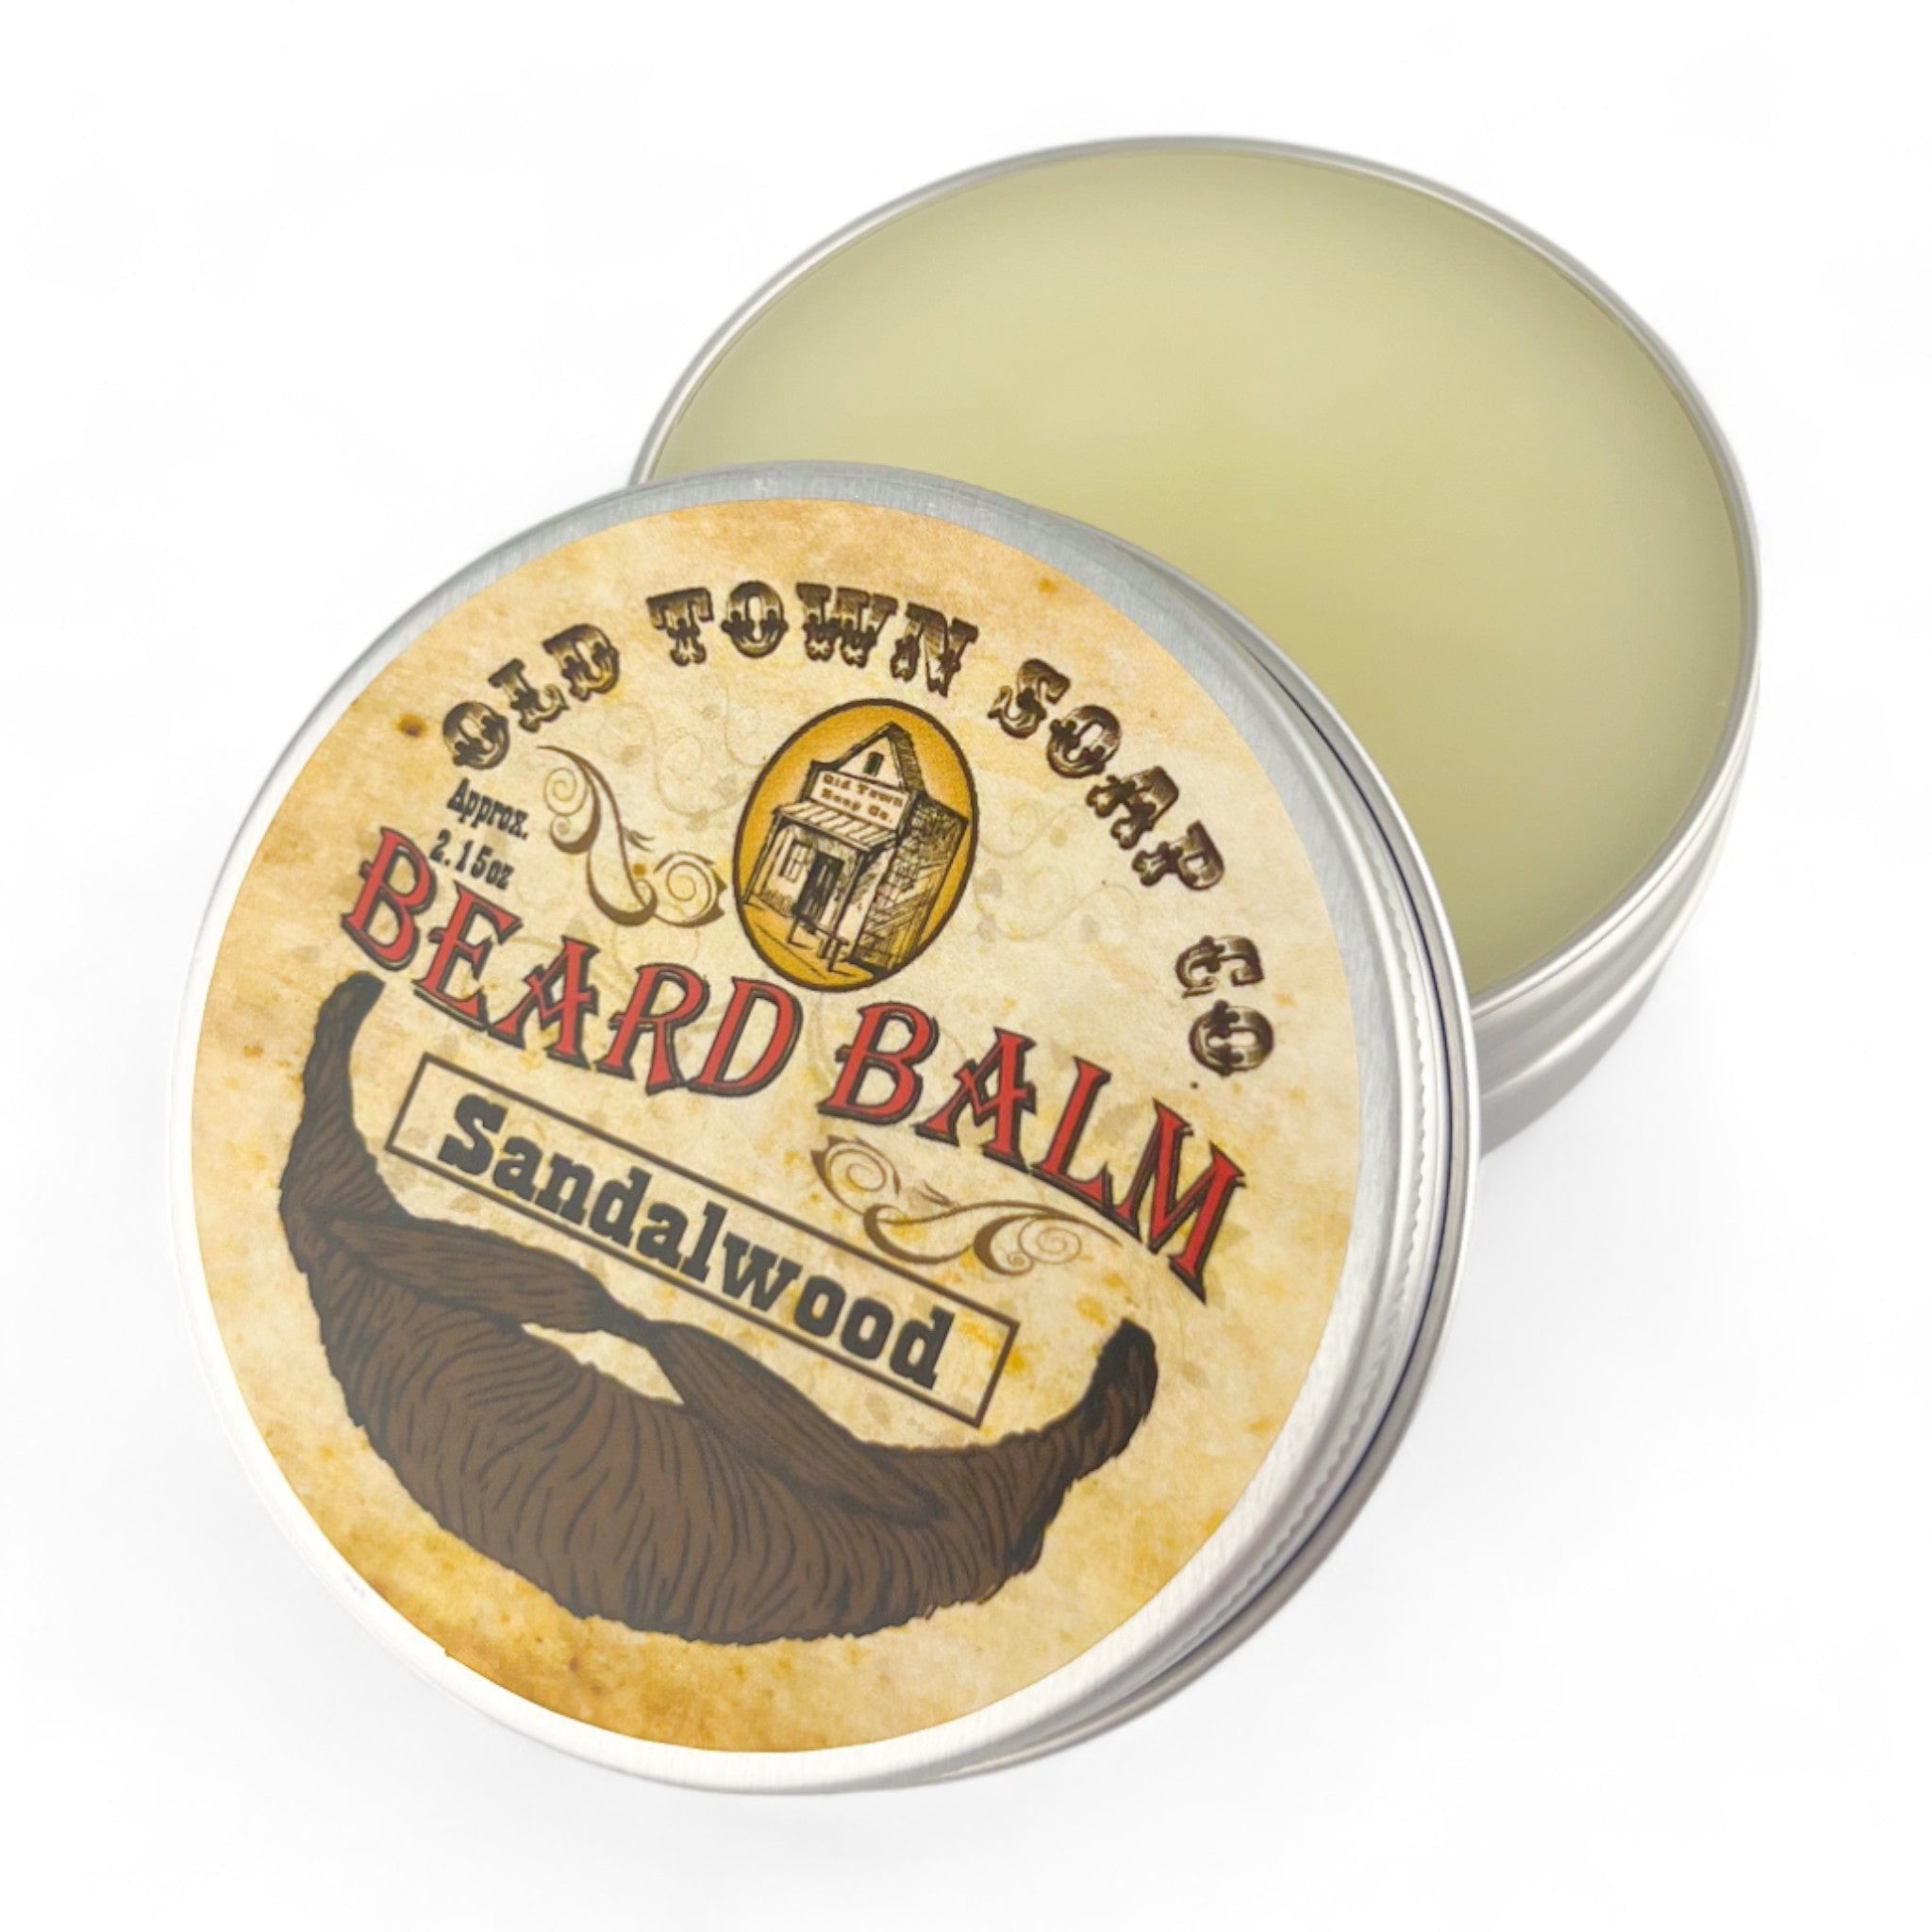 Sandalwood Beard Balm - Old Town Soap Co.